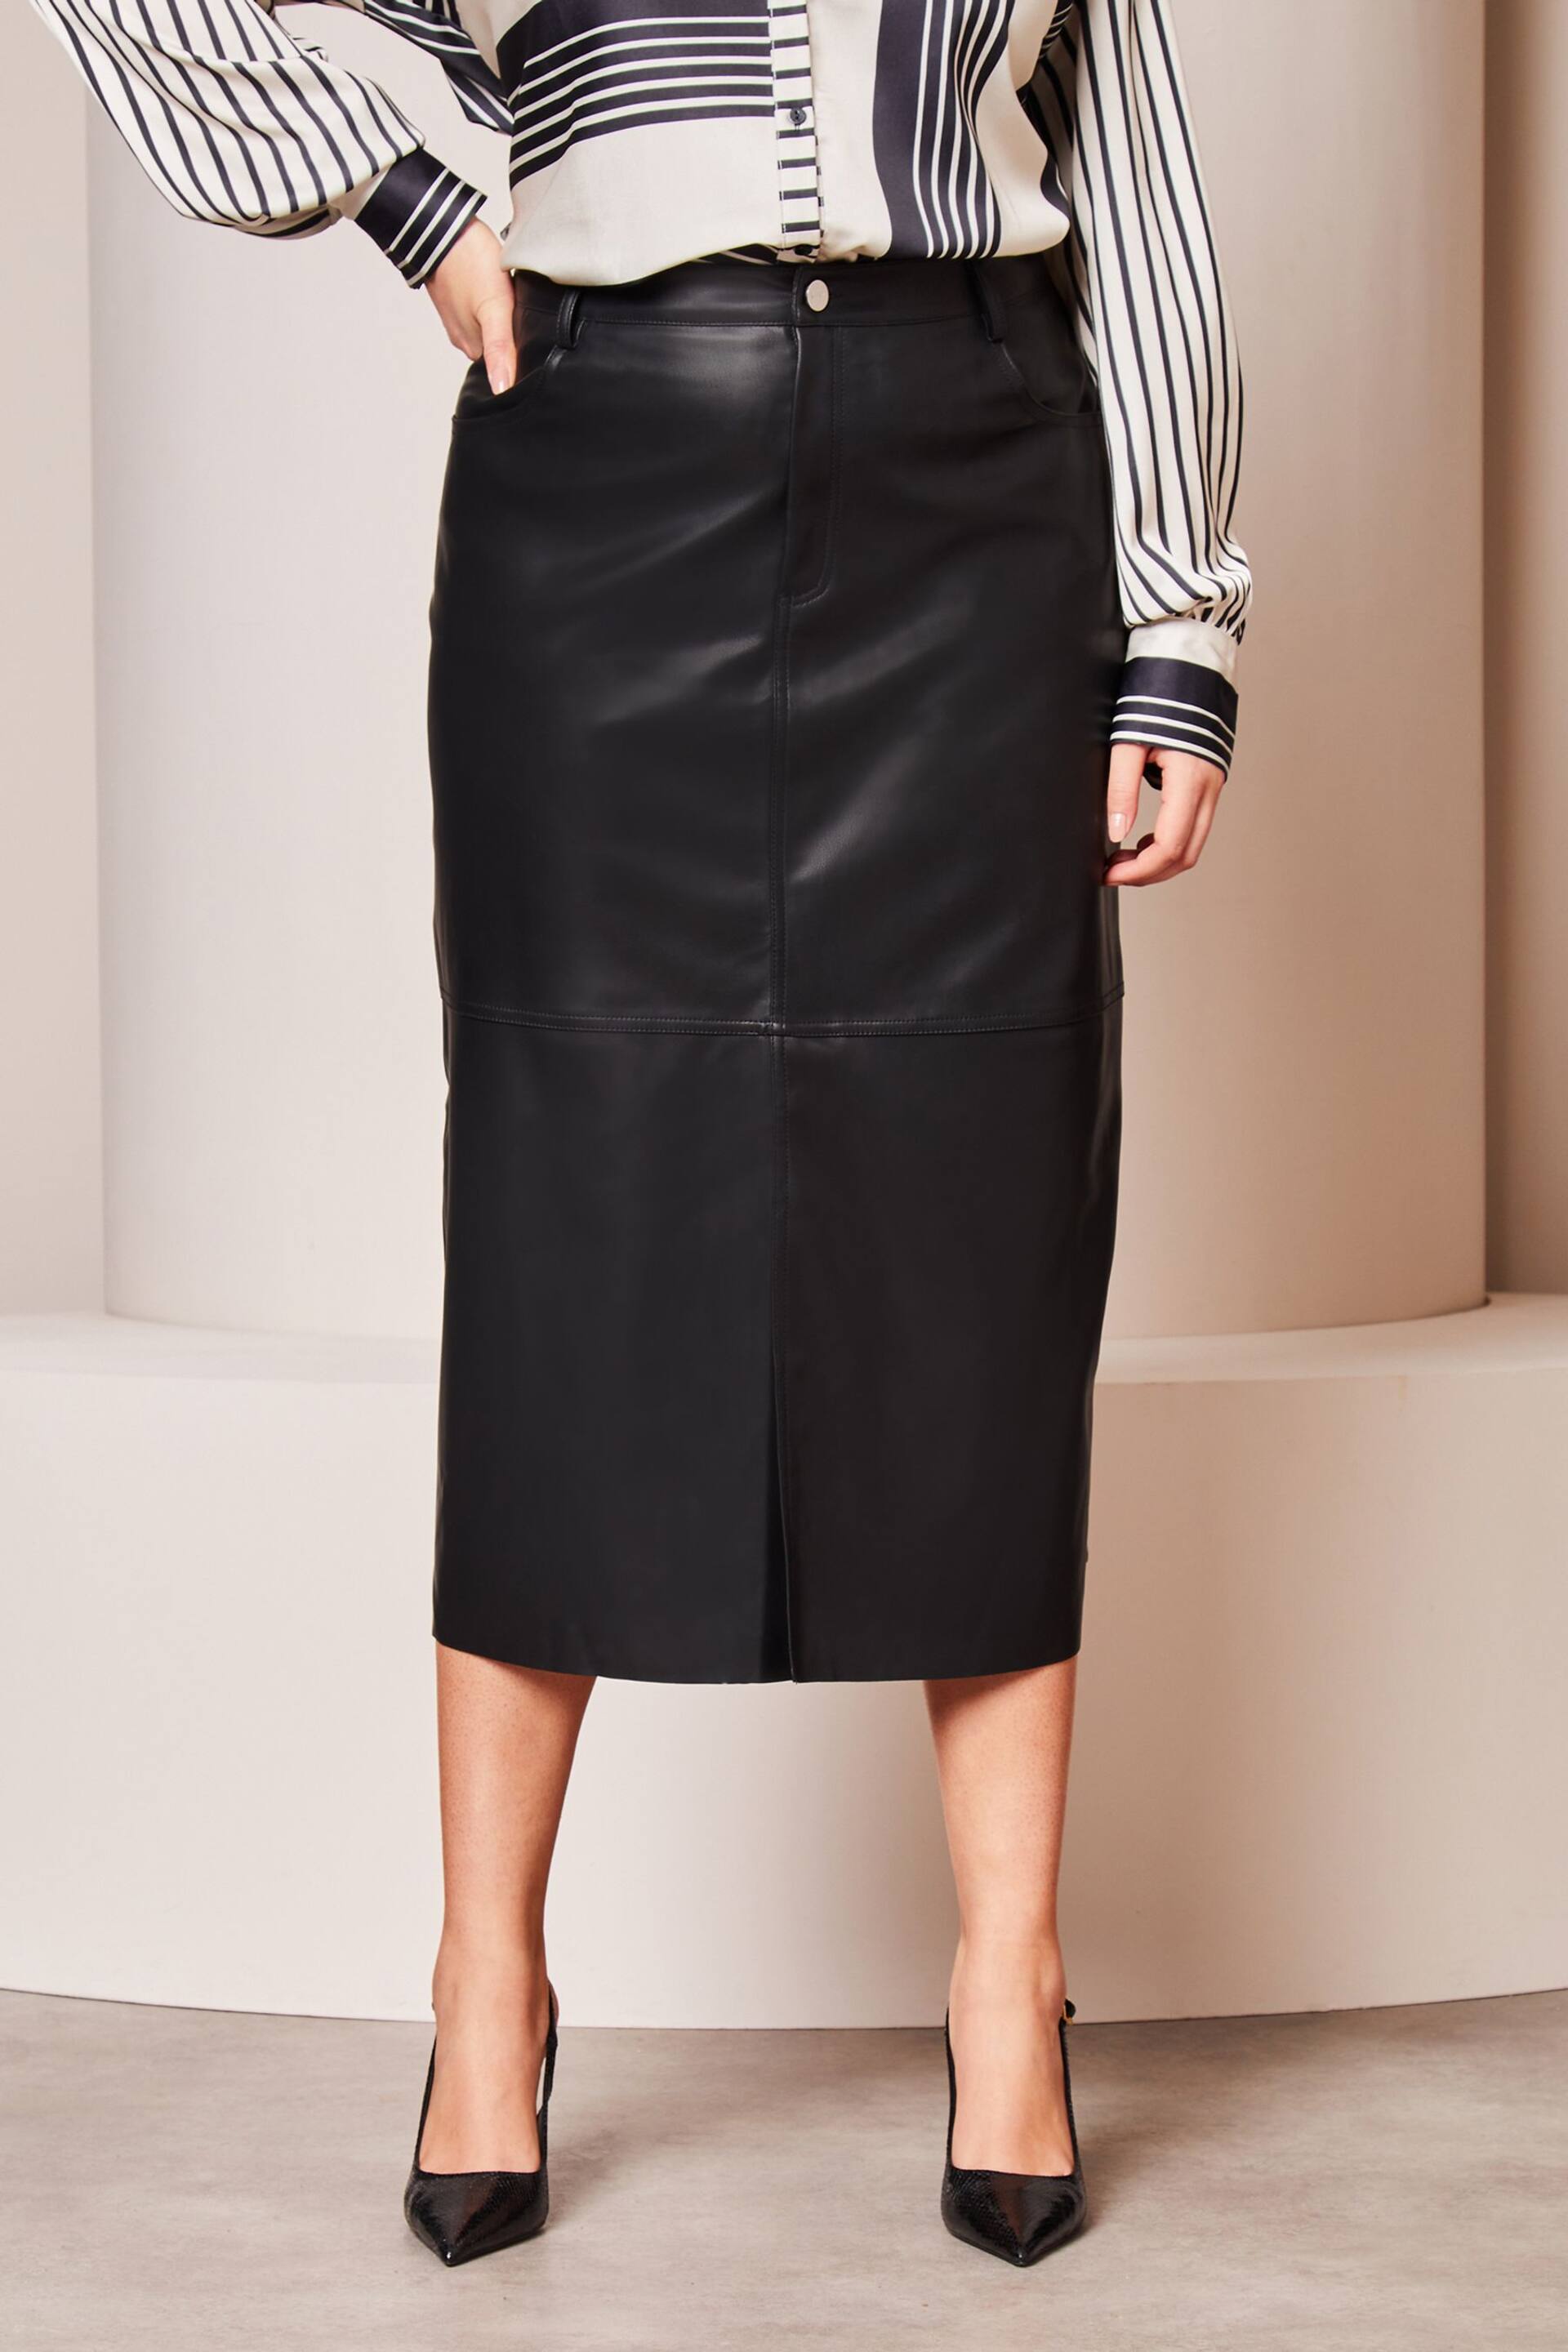 Lipsy Black Curve Faux Leather Split Hem Midi Skirt - Image 1 of 4